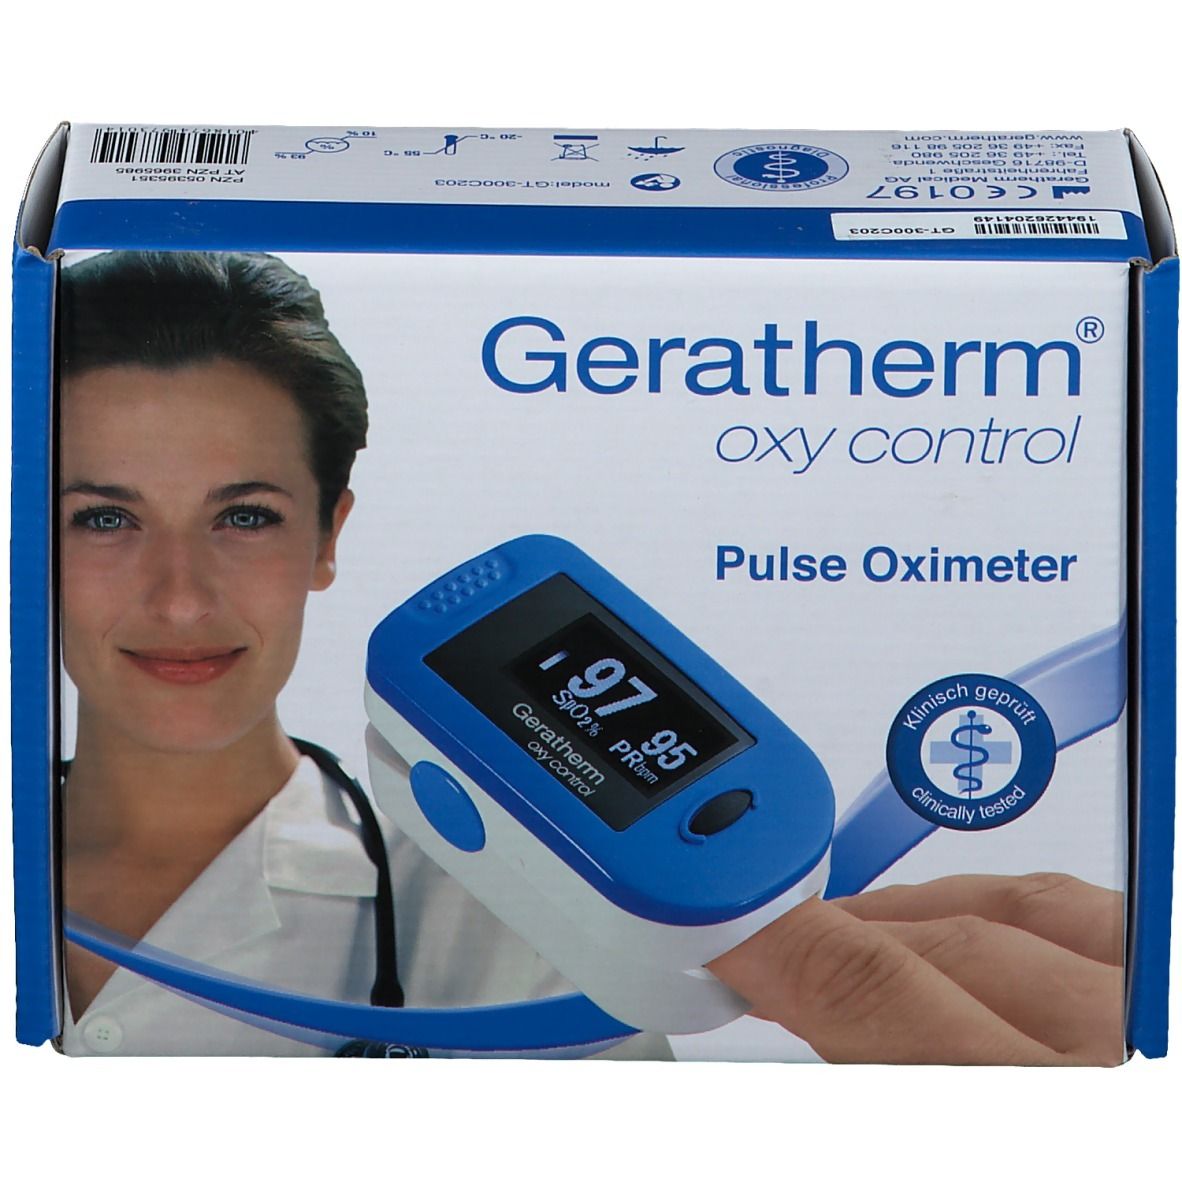 Geratherm® oxy control pulse oximeter